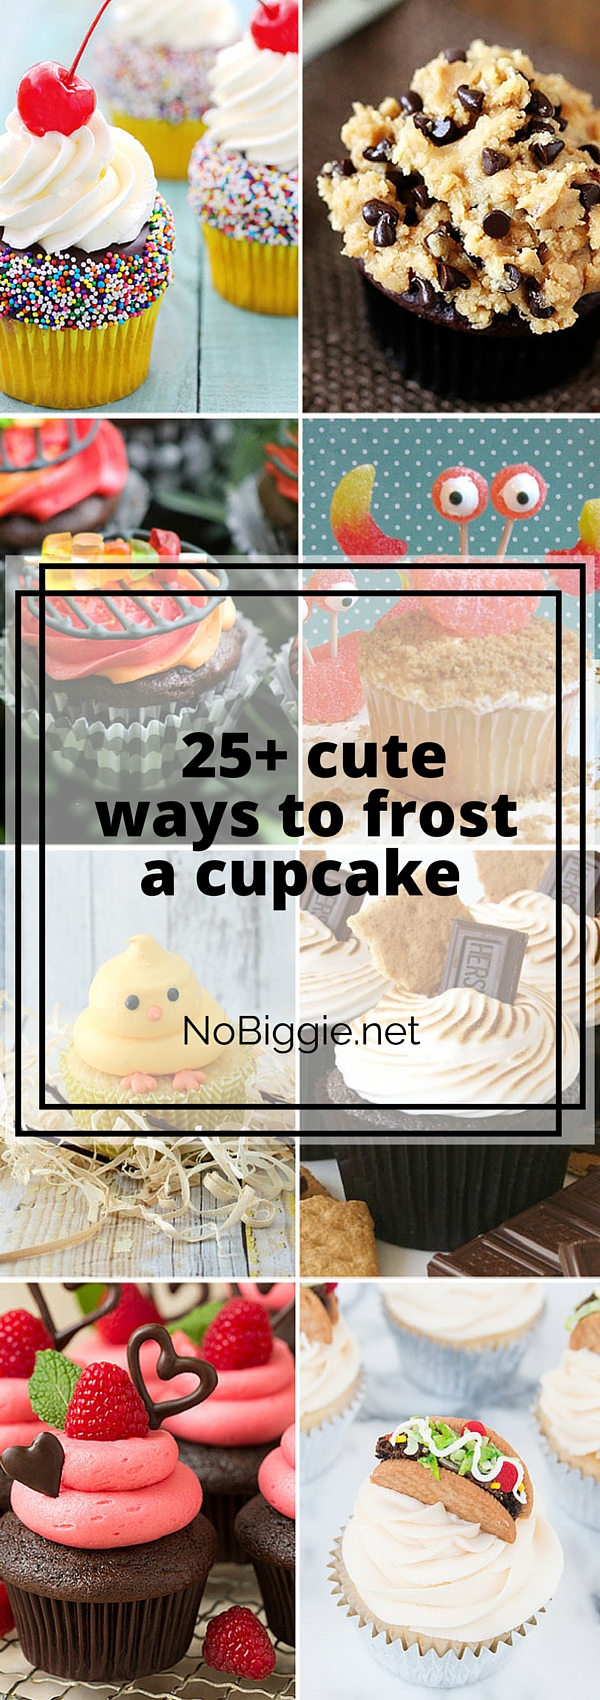 25+ Cute Ways to Frost a Cupcake | NoBiggie.net